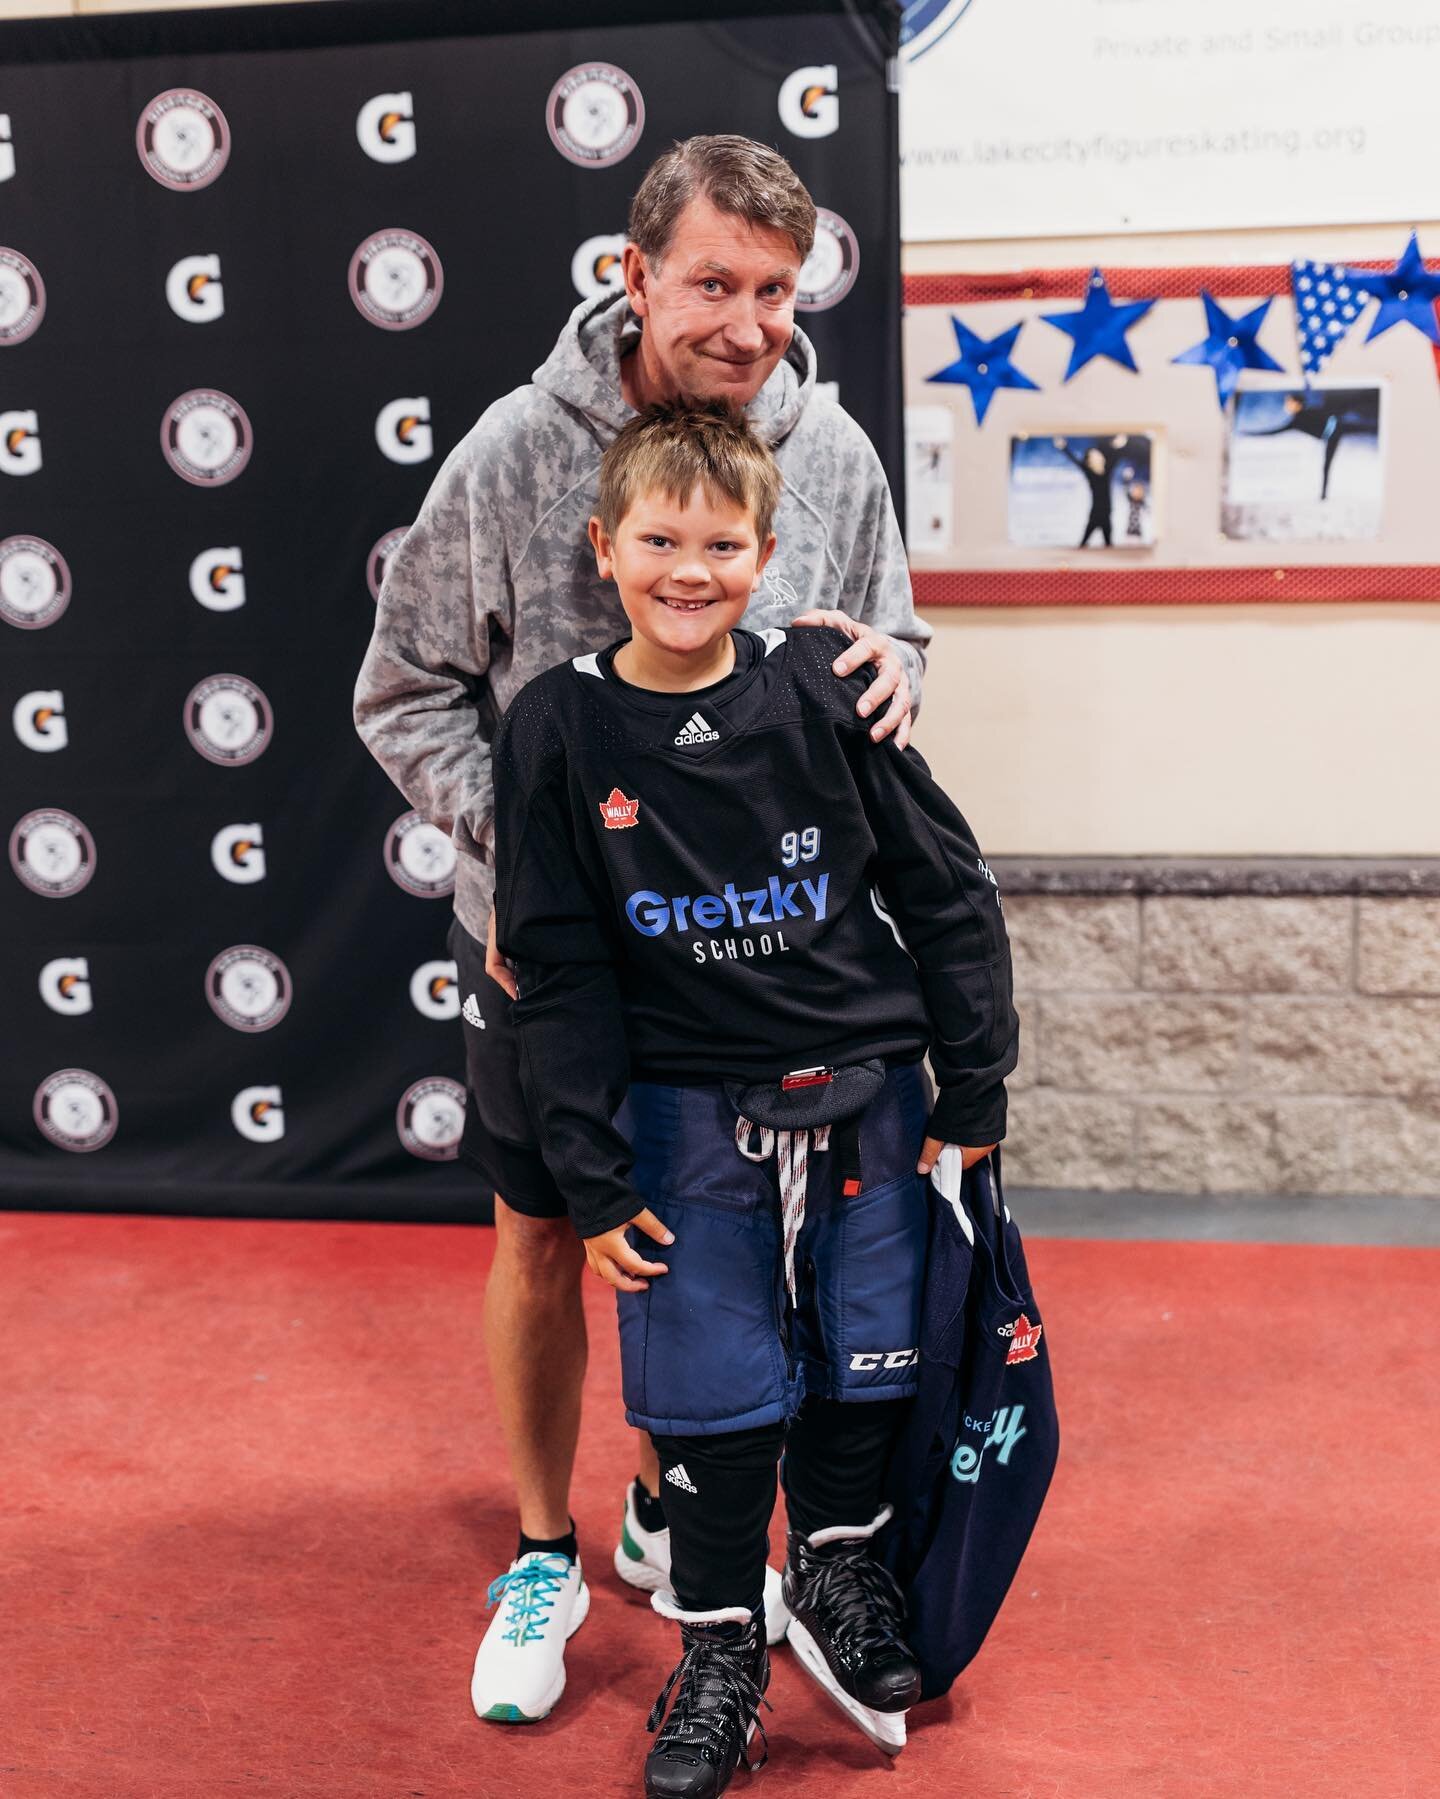 Year THREE of @gretzkyhockeyschool is officially in the books🏒🙌🏼

As always, it was the best week of the summer! ☀️

#gretzkyhockeyschool